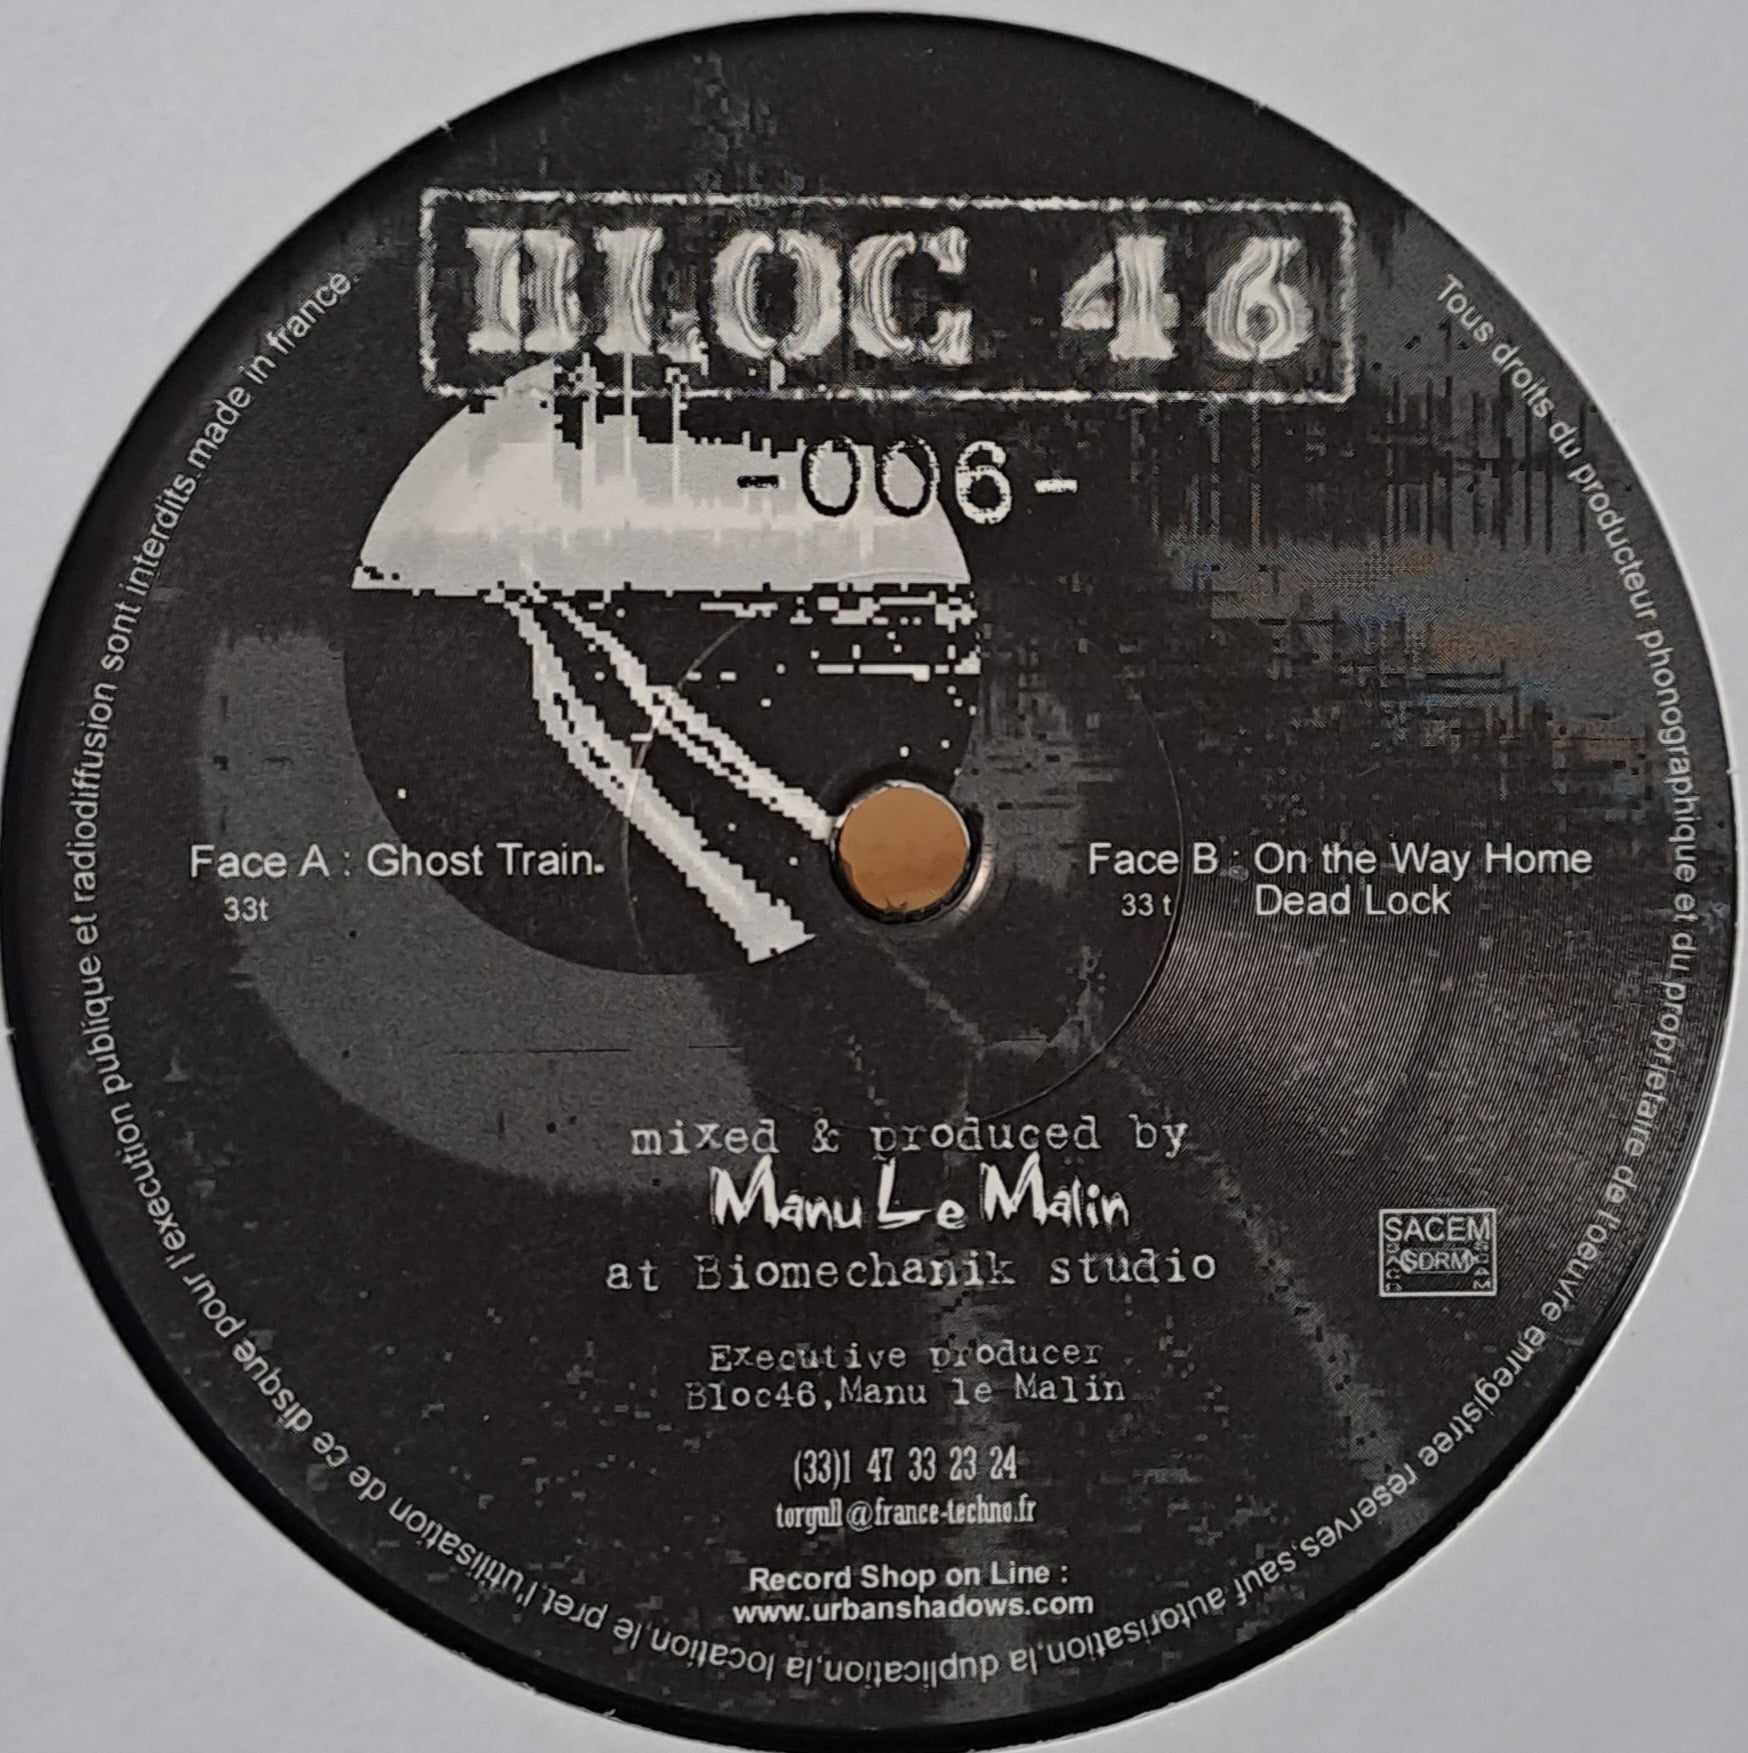 Bloc 46 06 - vinyle hardcore